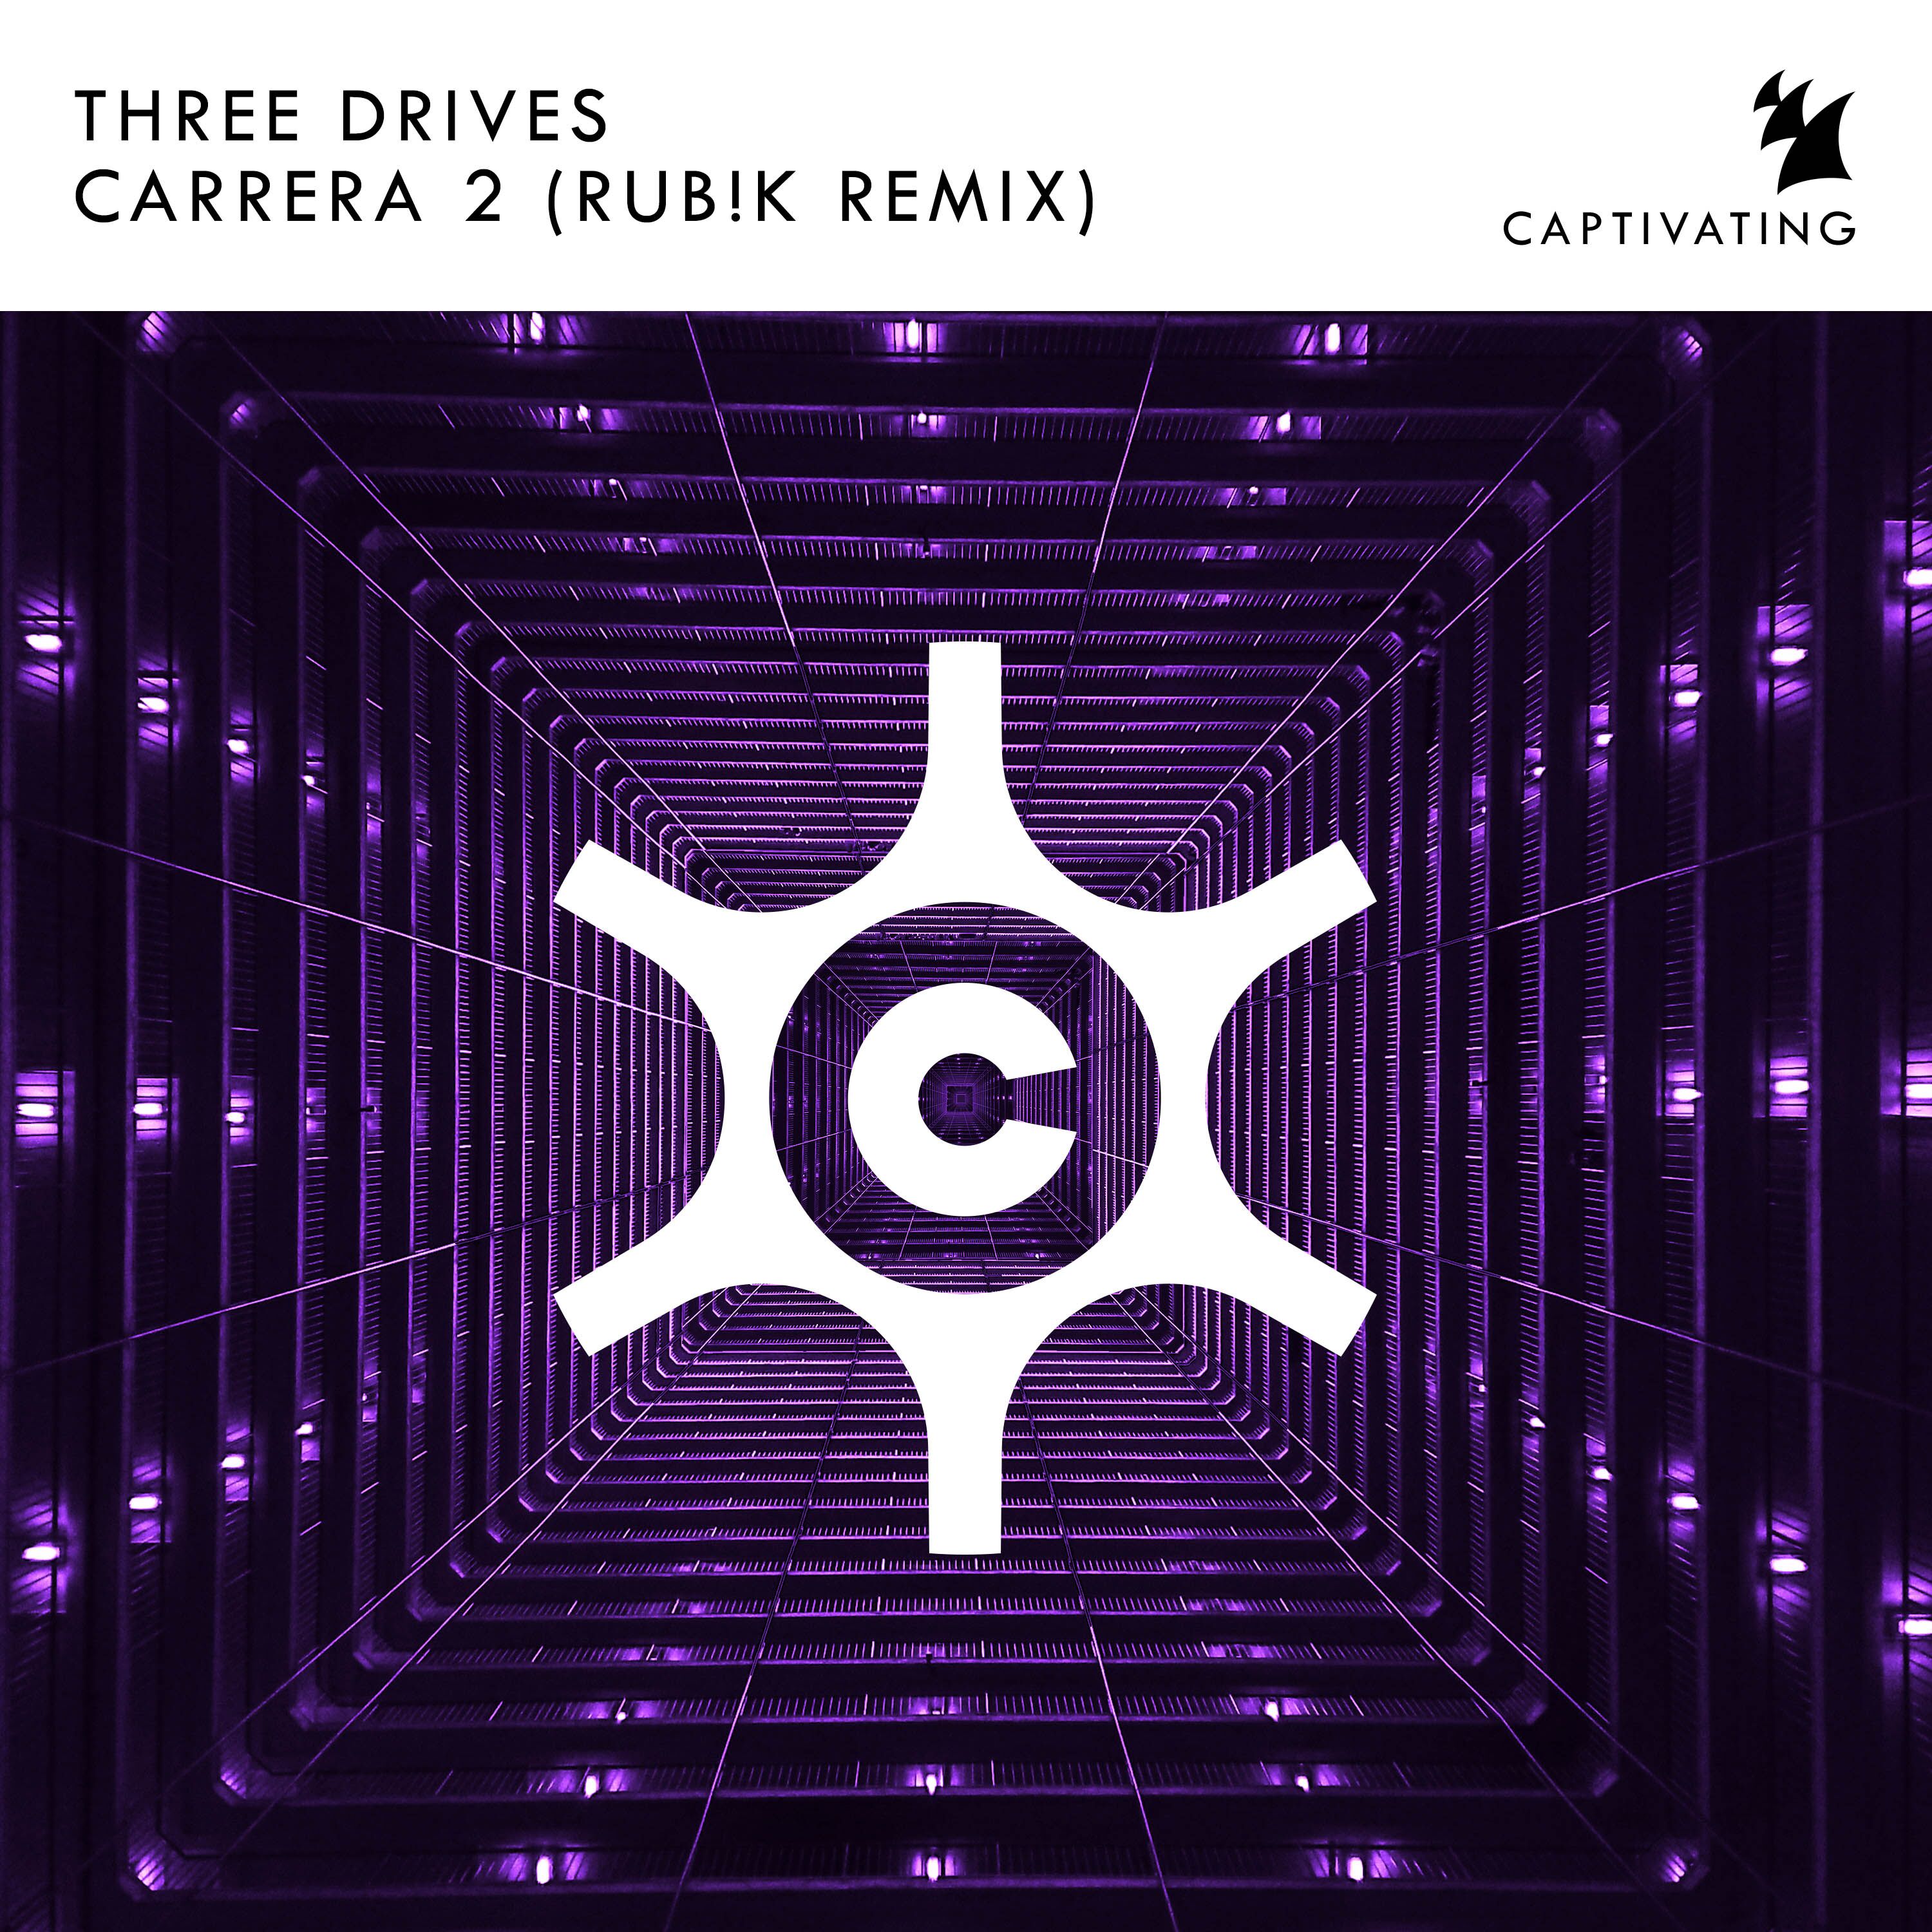 Three Drives presents Carrera 2 (Rub!k Remix) on Captivating